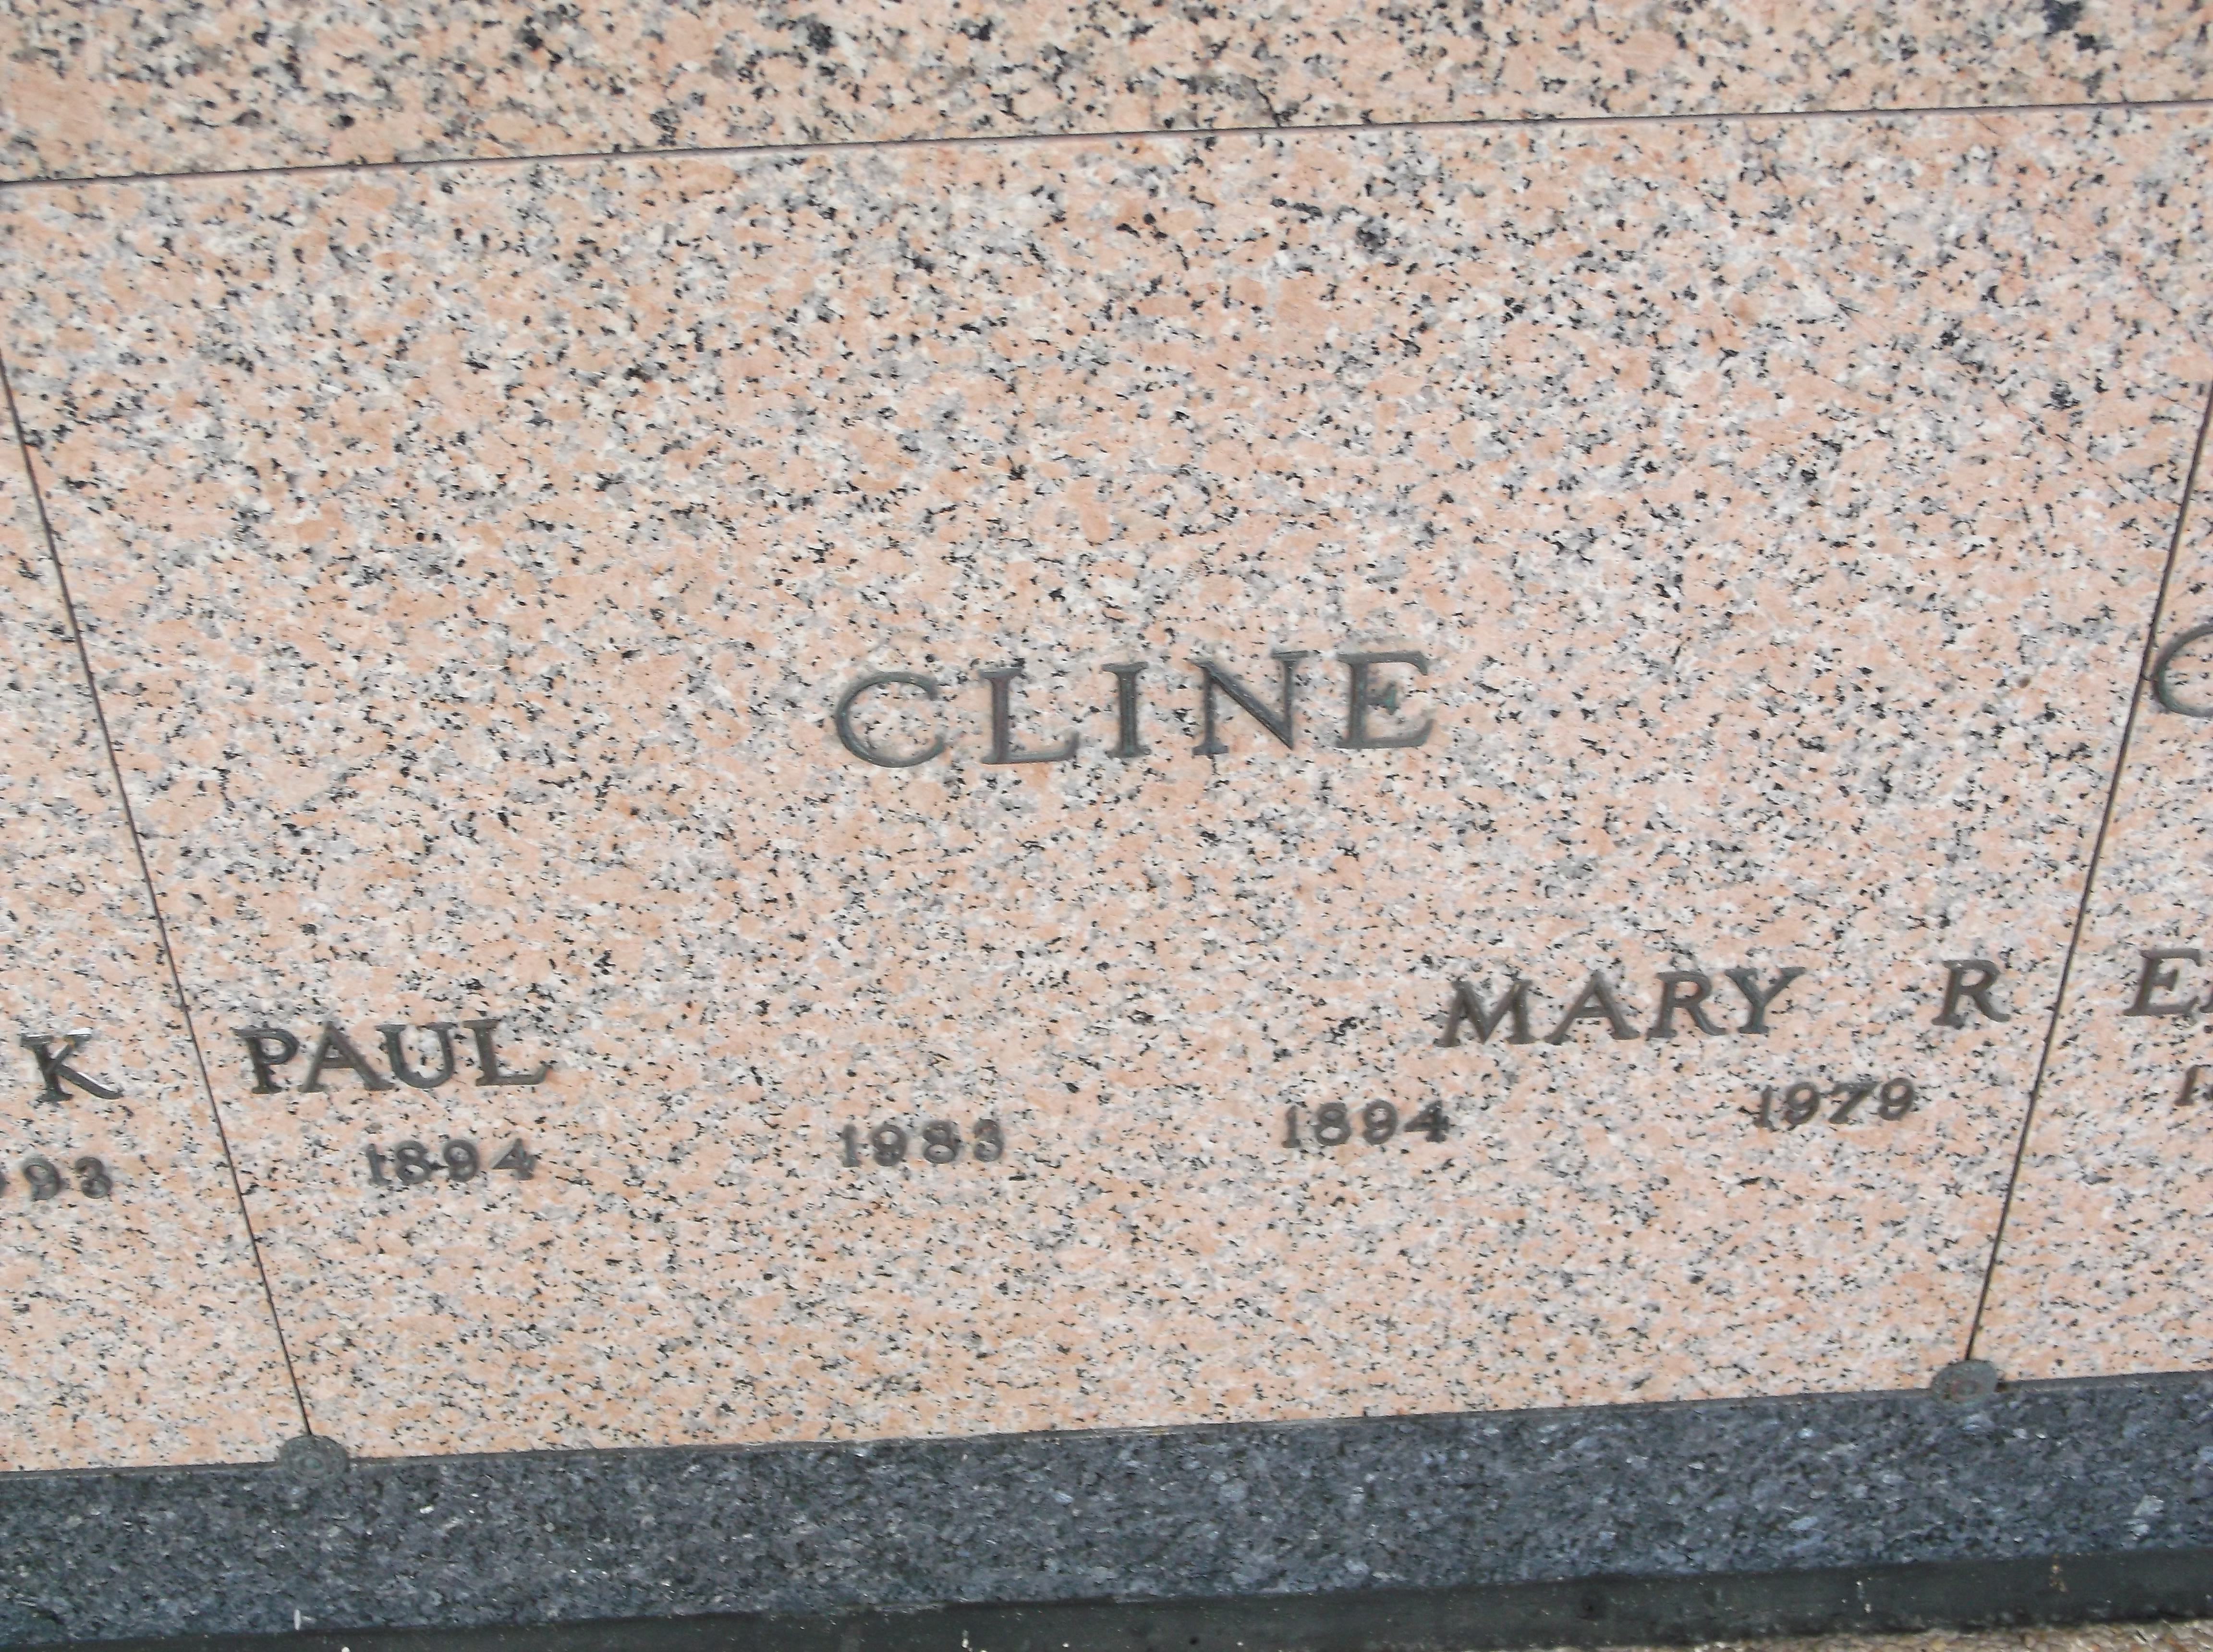 Paul Cline